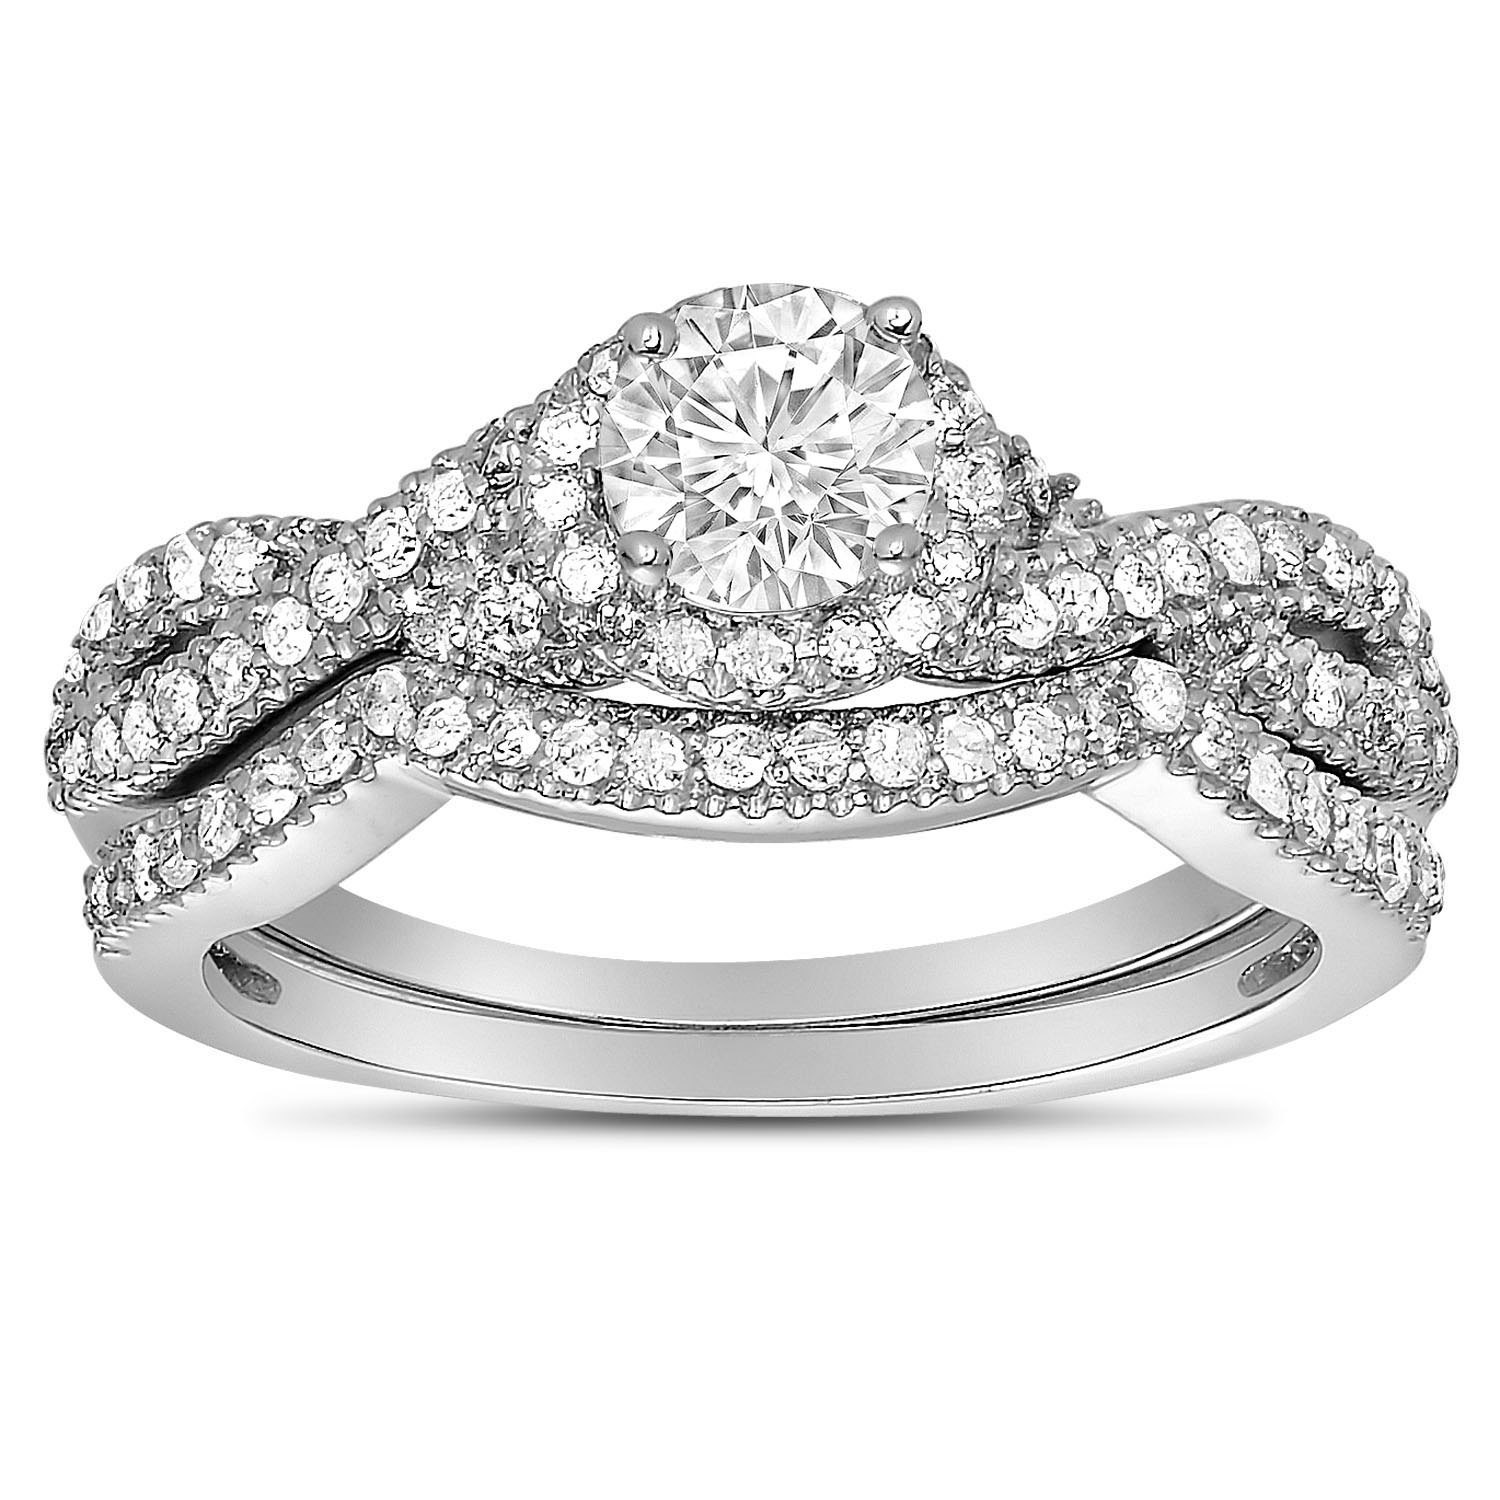 Infinity Wedding Ring Set
 2 Carat Round Diamond Infinity Wedding Ring Set in White